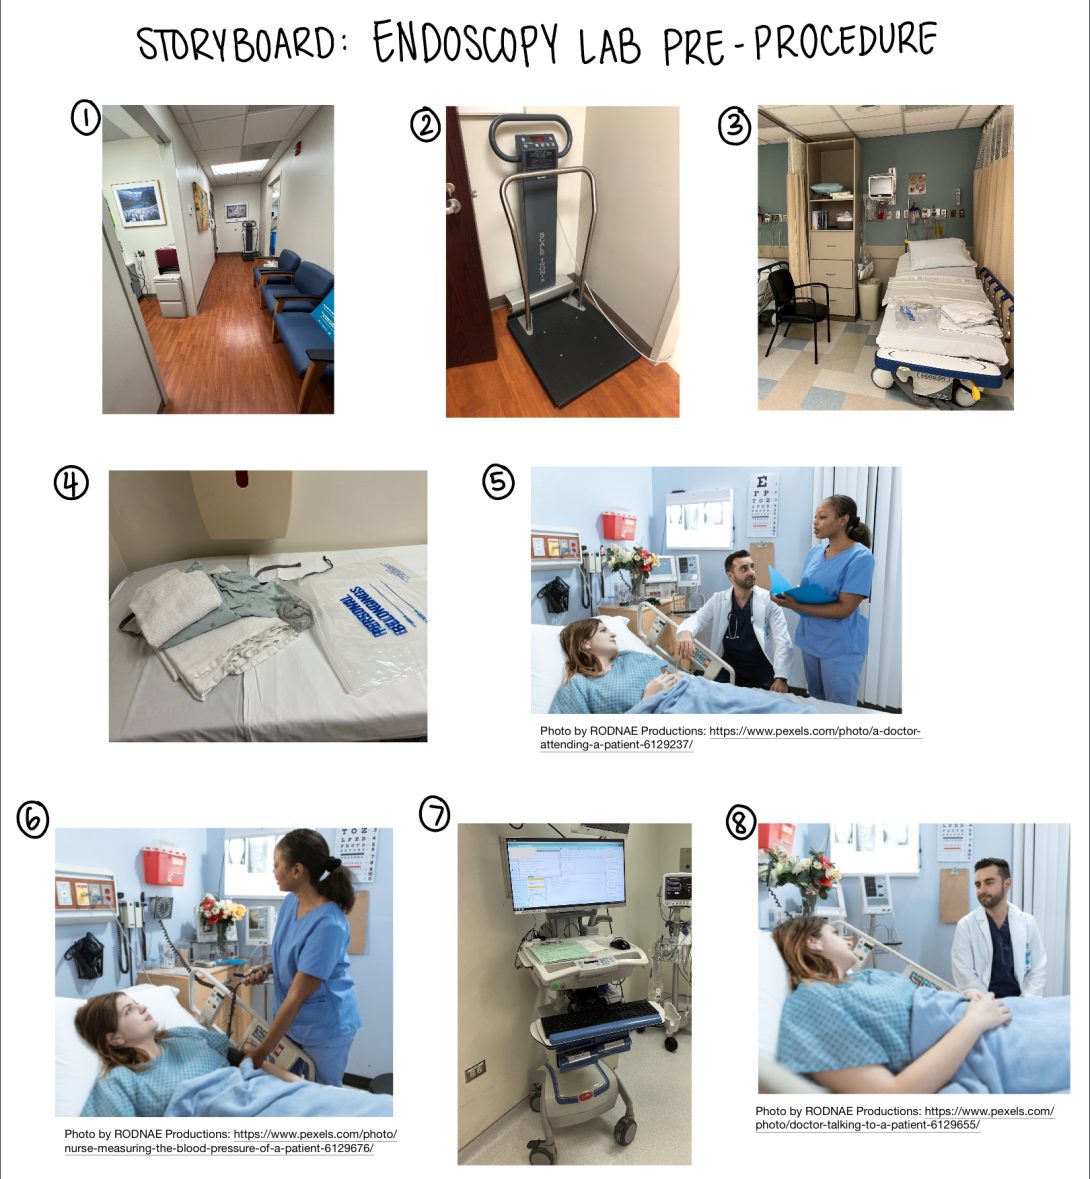 Pictorial storyboard of pre-procedure process in endoscopy lab